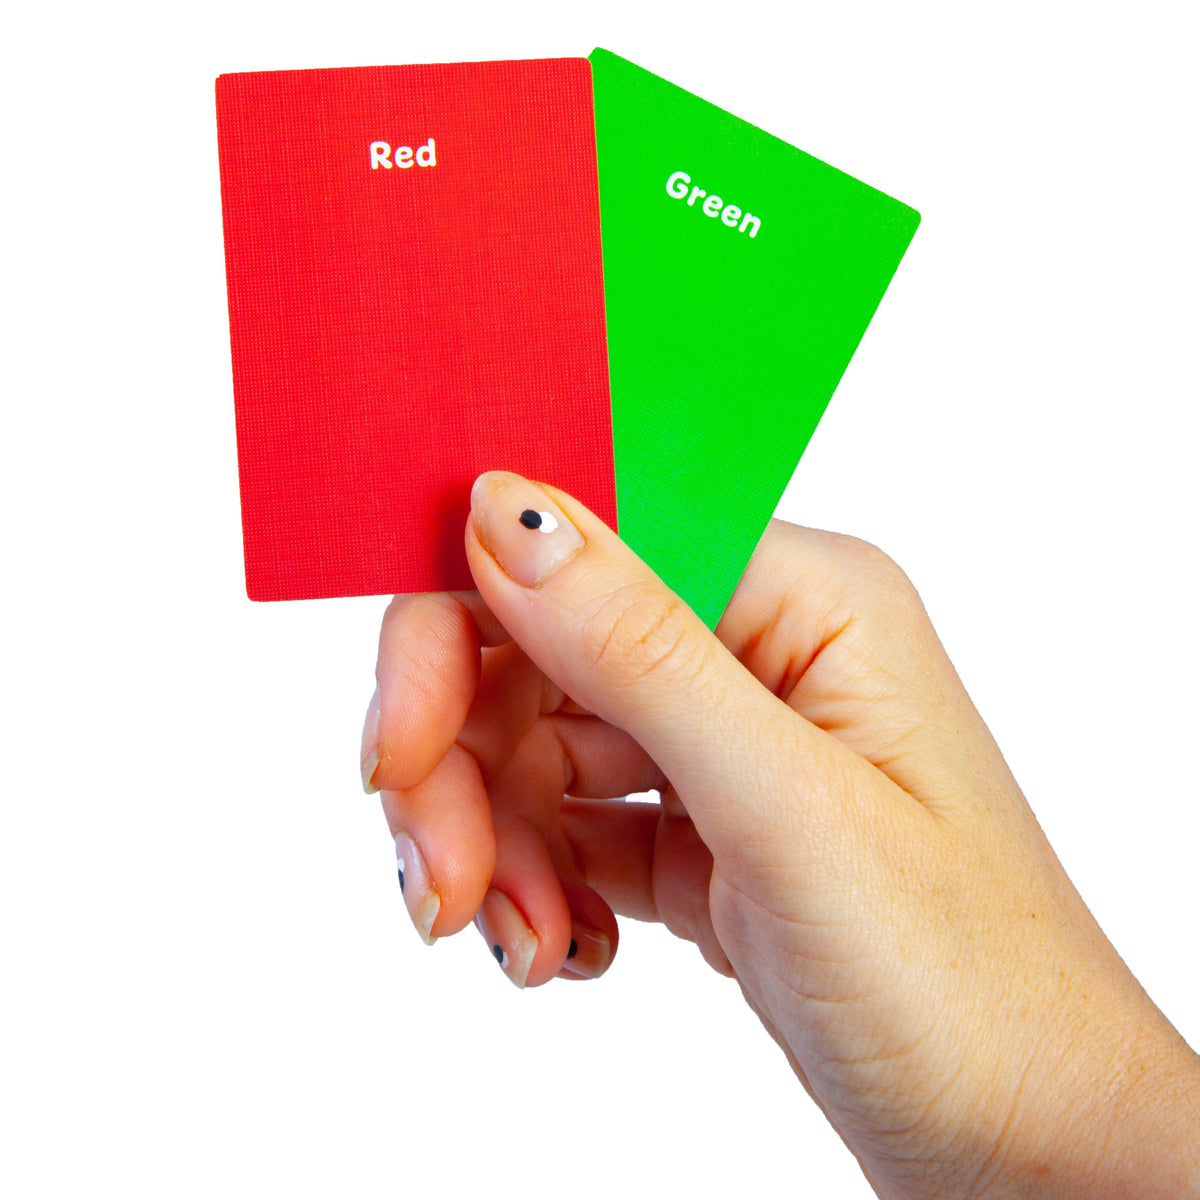 Junior Colour Brain Card Game - Penny Black